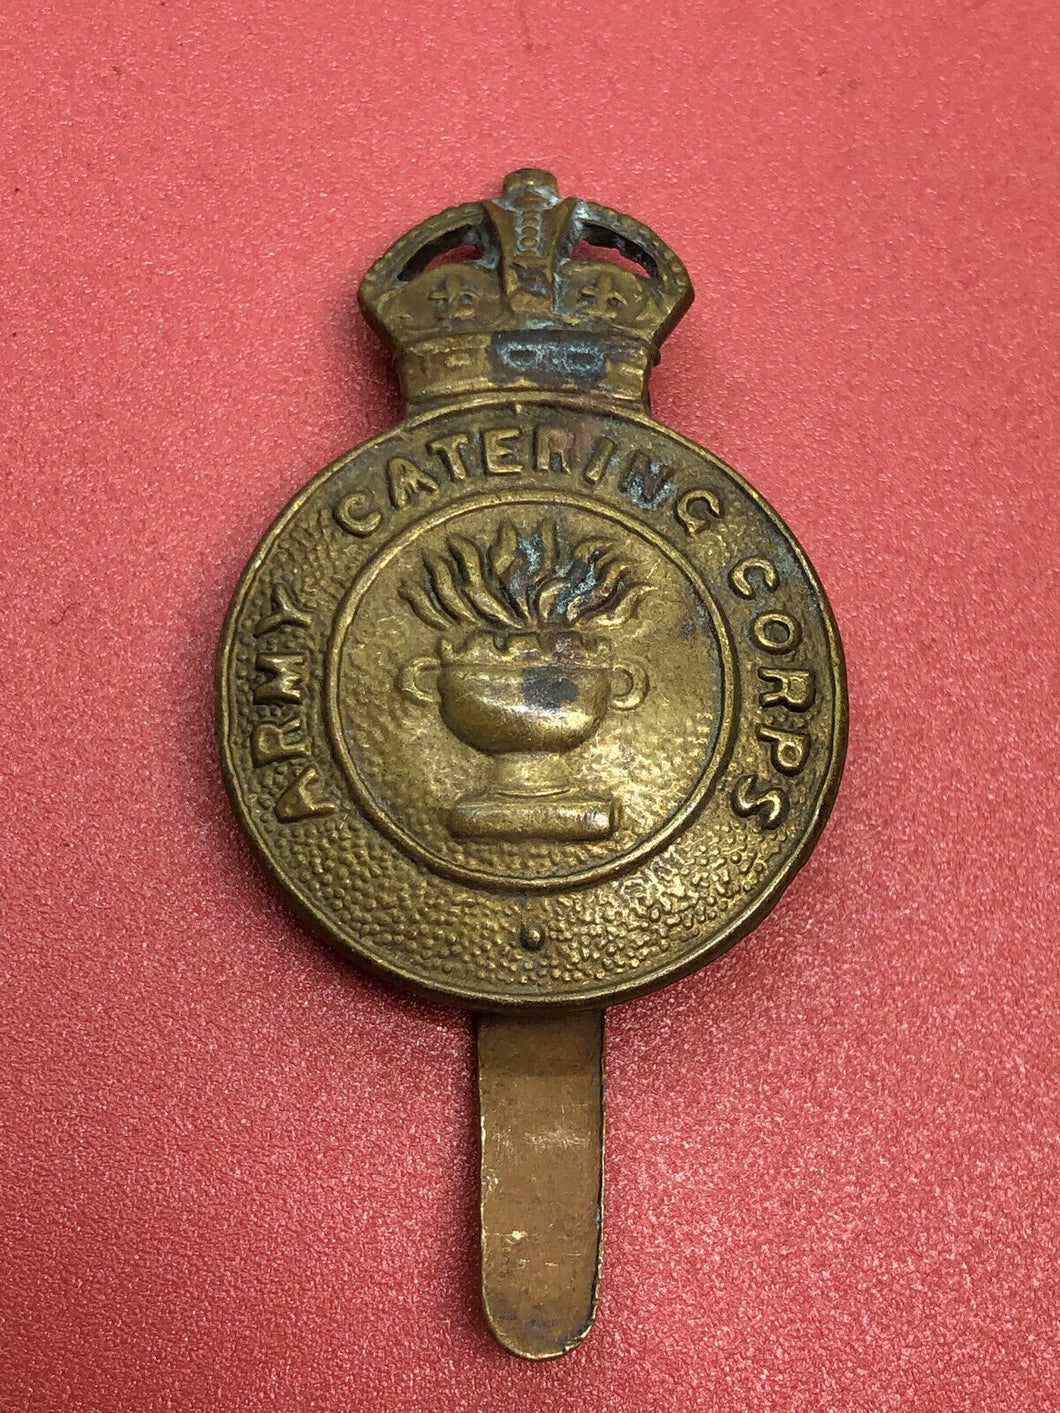 Original WW2 British Army Cap Badge - Army Catering Corps